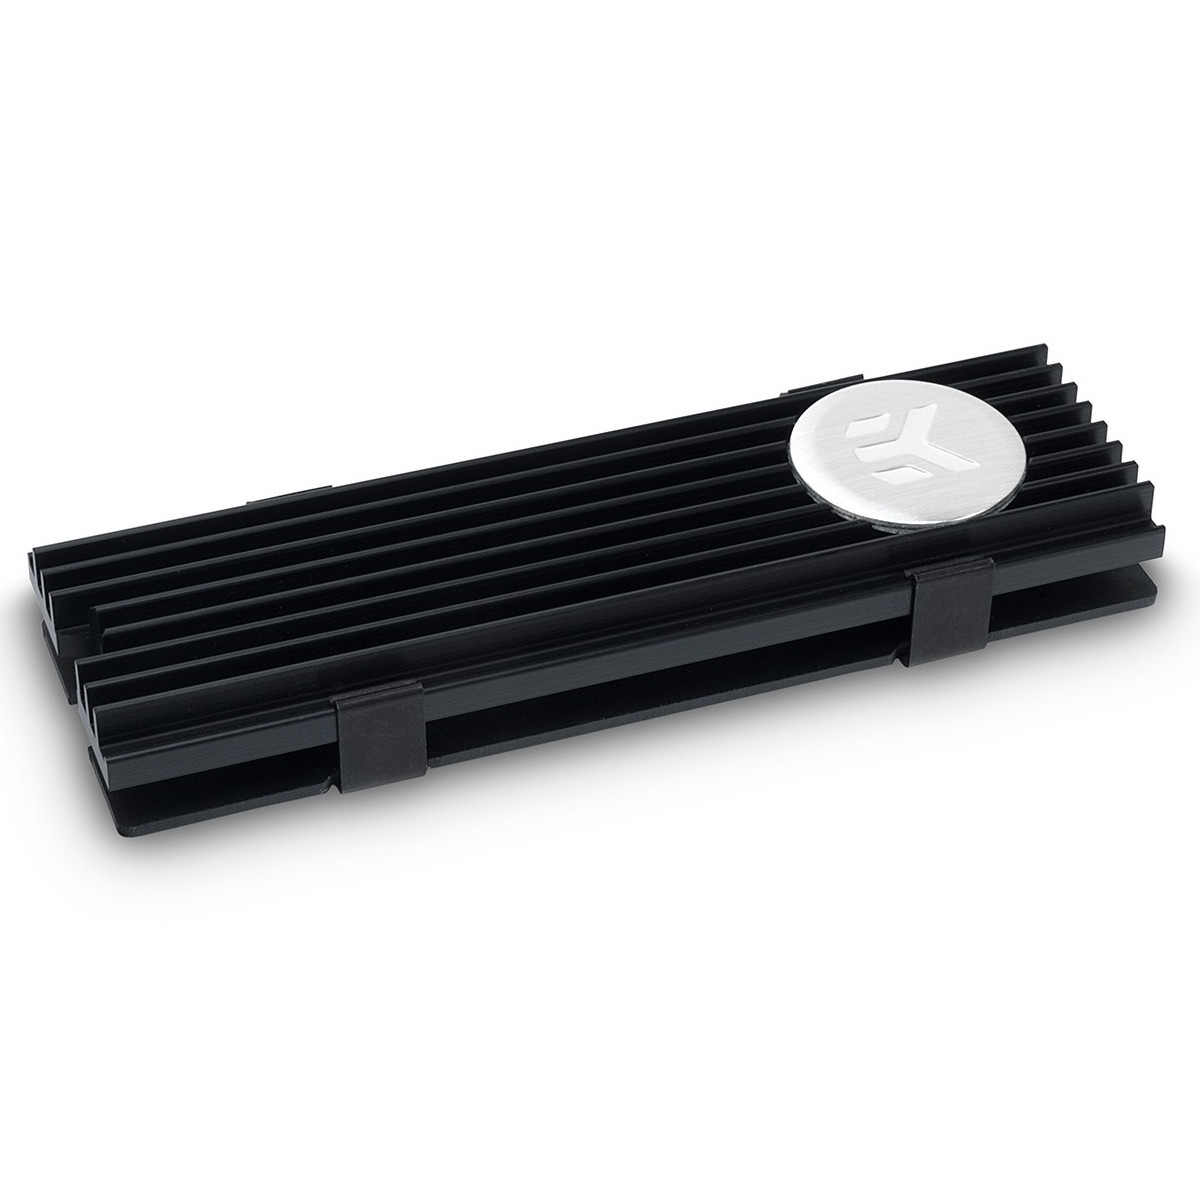 WD - WD Black SN850 1TB Gen4 M.2 SSD Drive  M.2 Heatsink Bundle Compatible with 